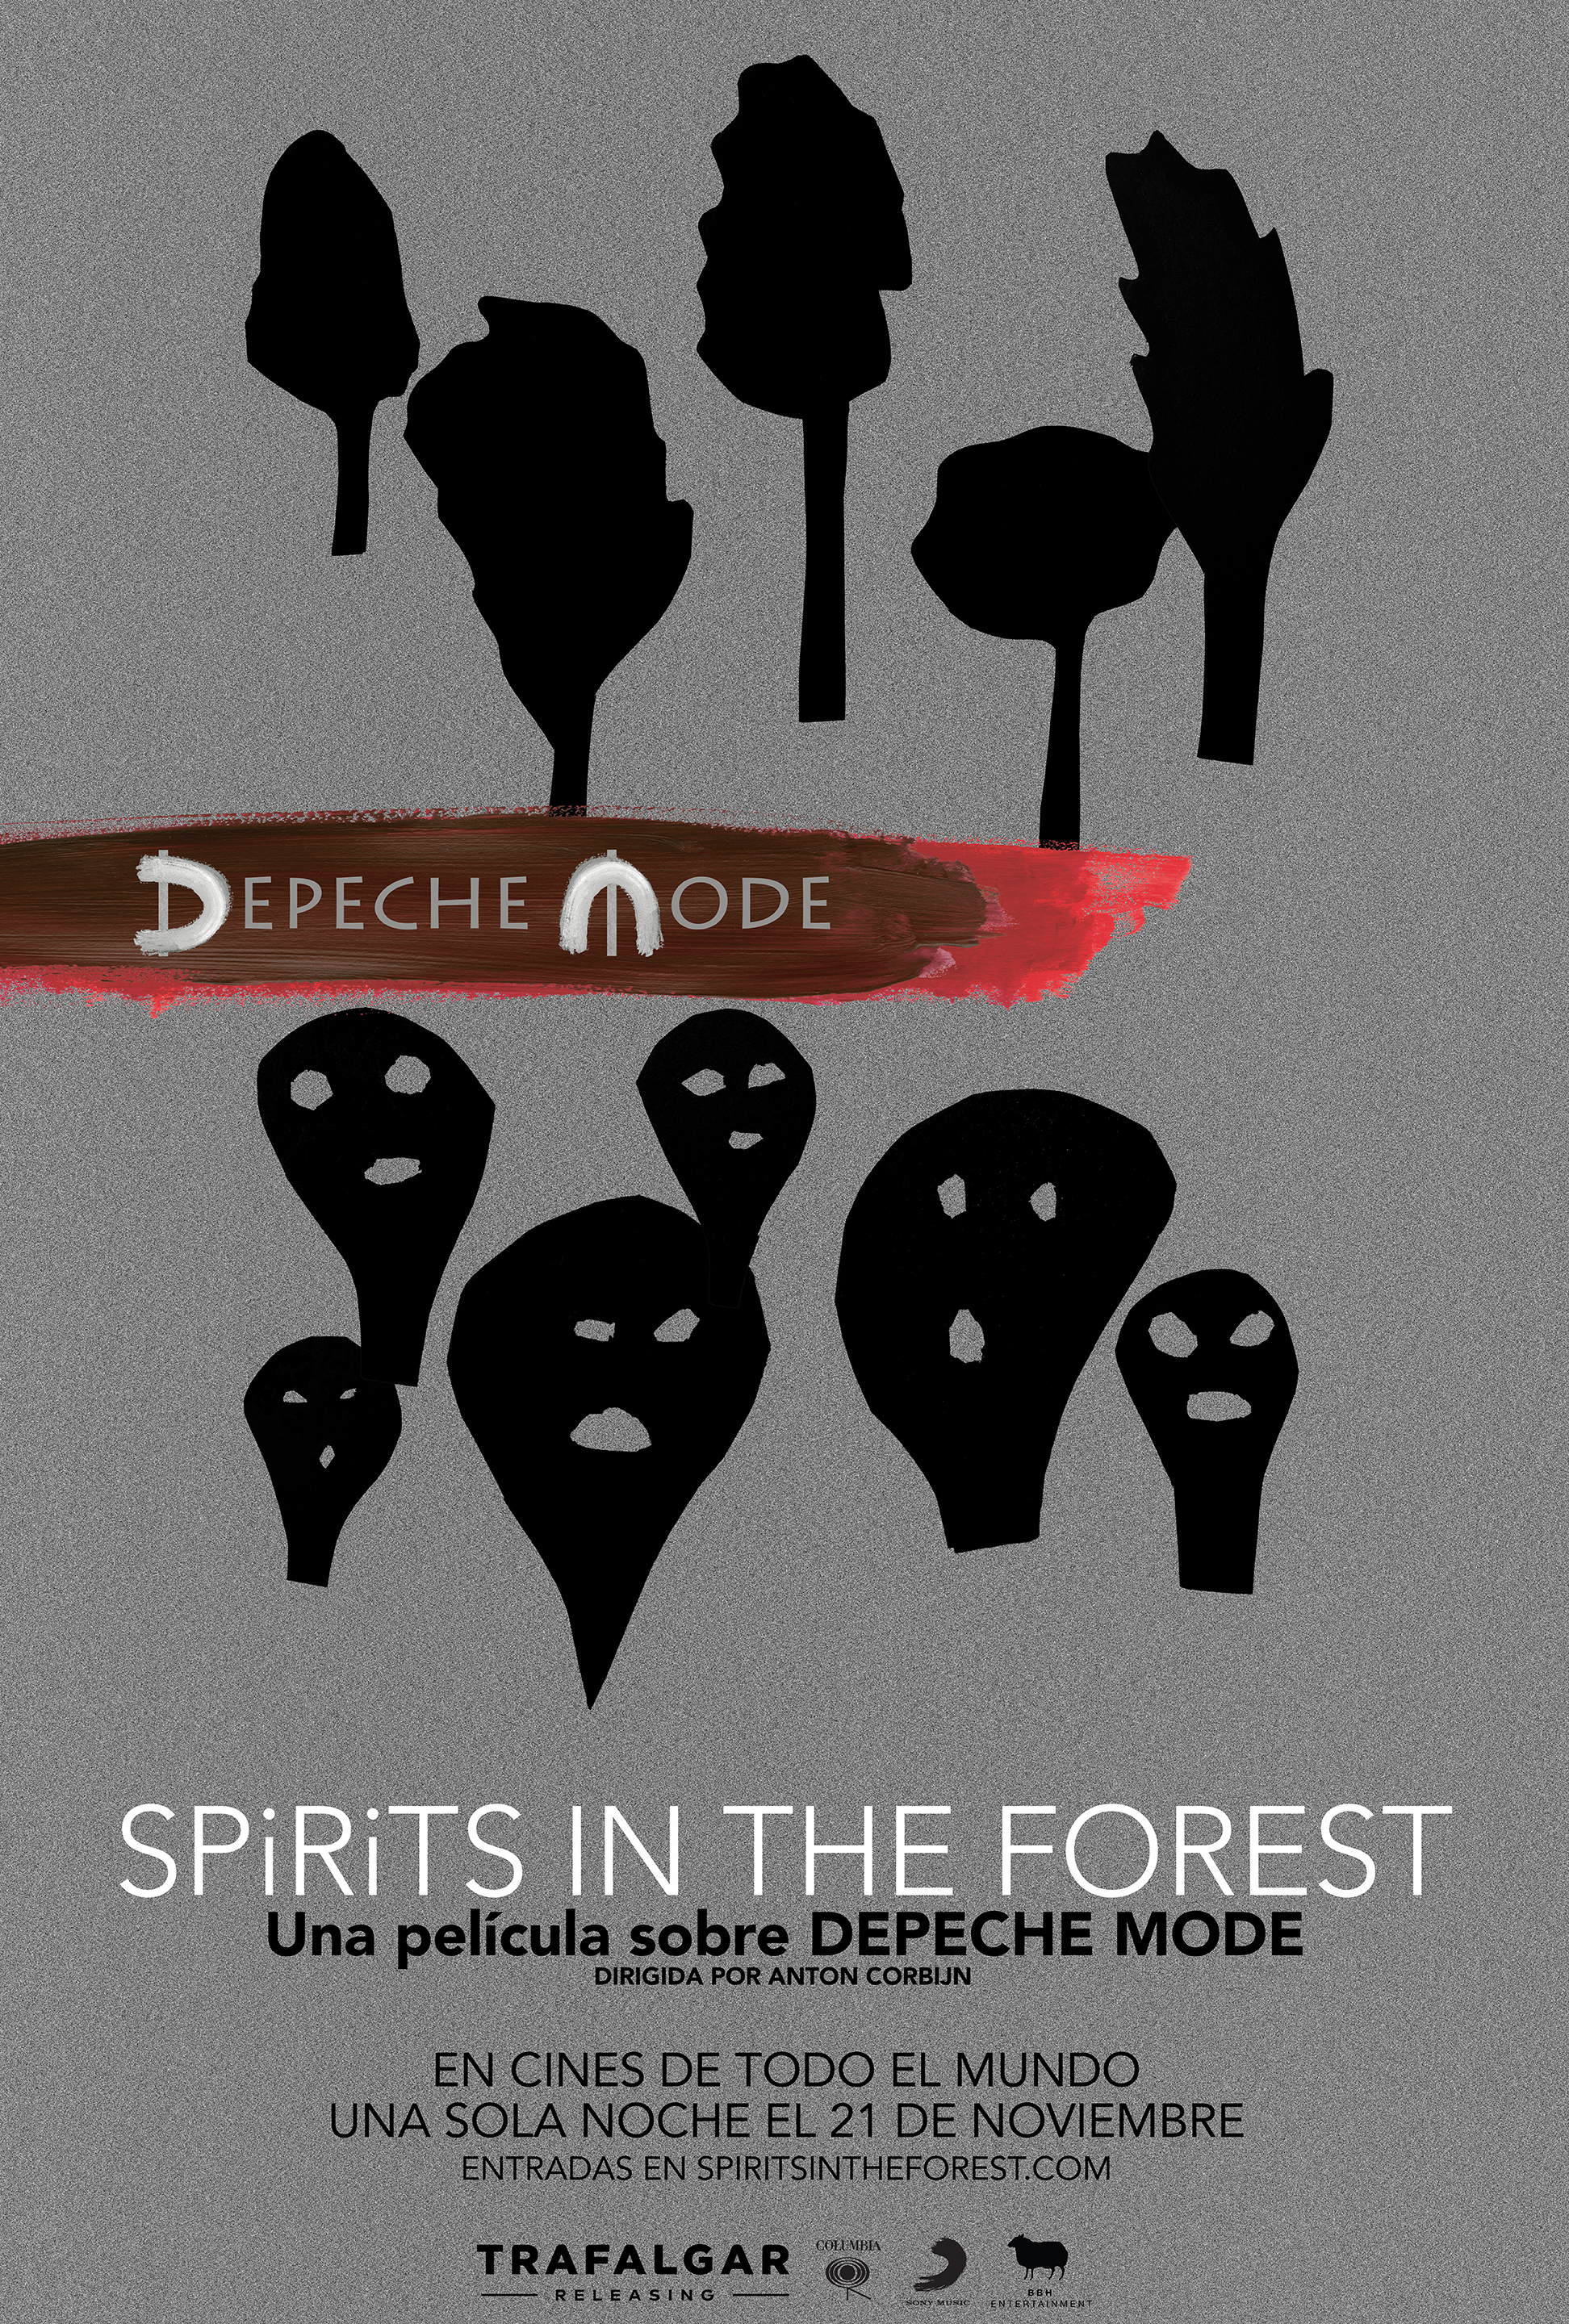 Resultado de imagen para depeche mode spirits in the forest